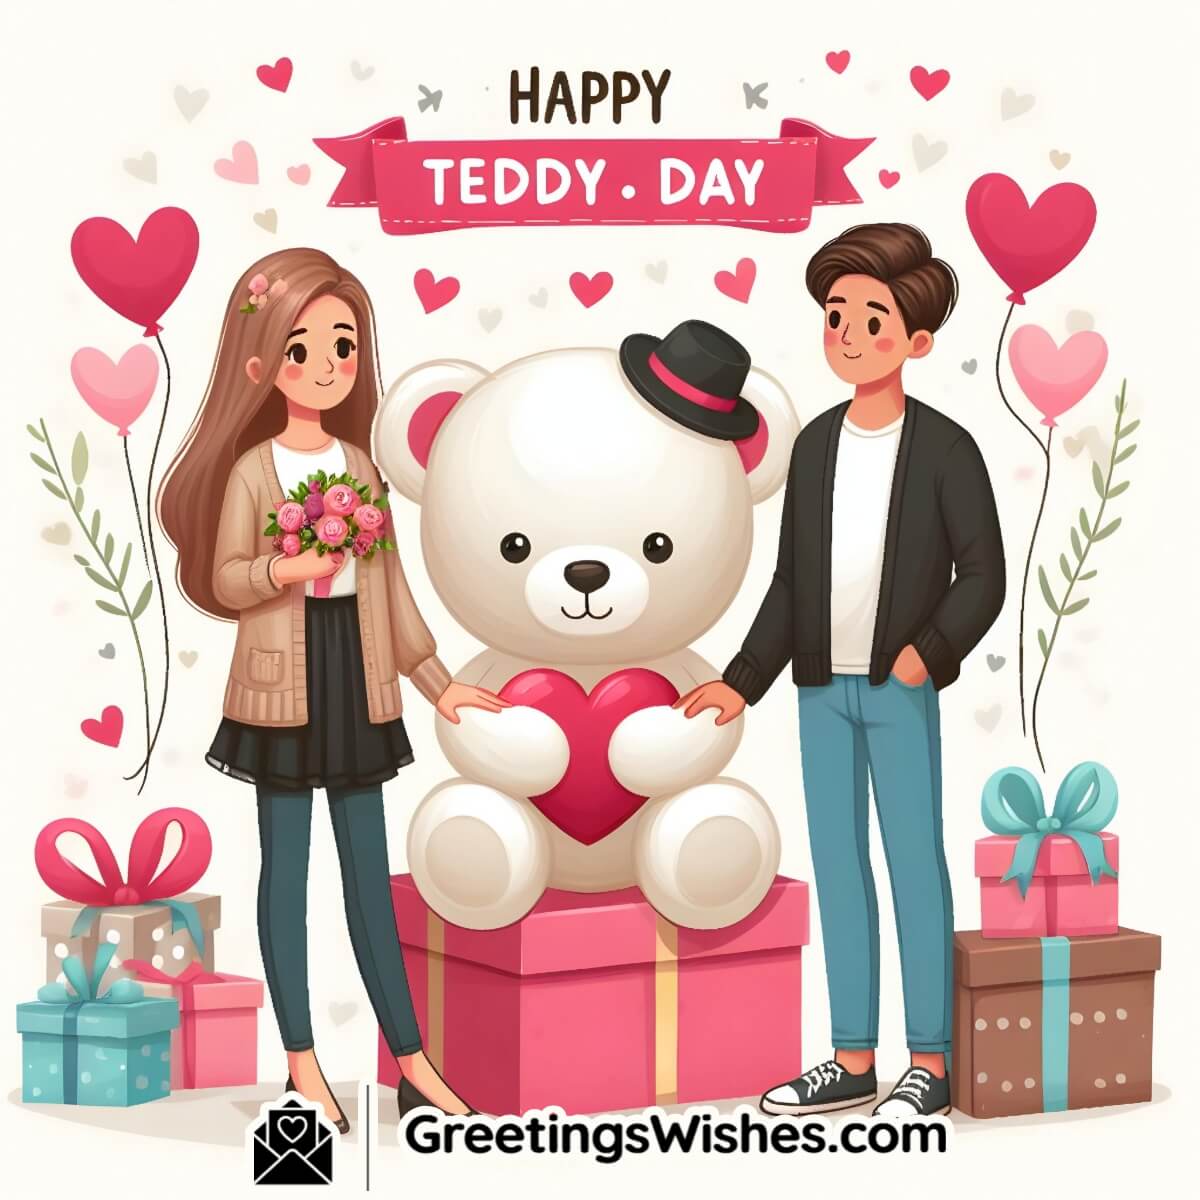 Happy Teddy Day Image